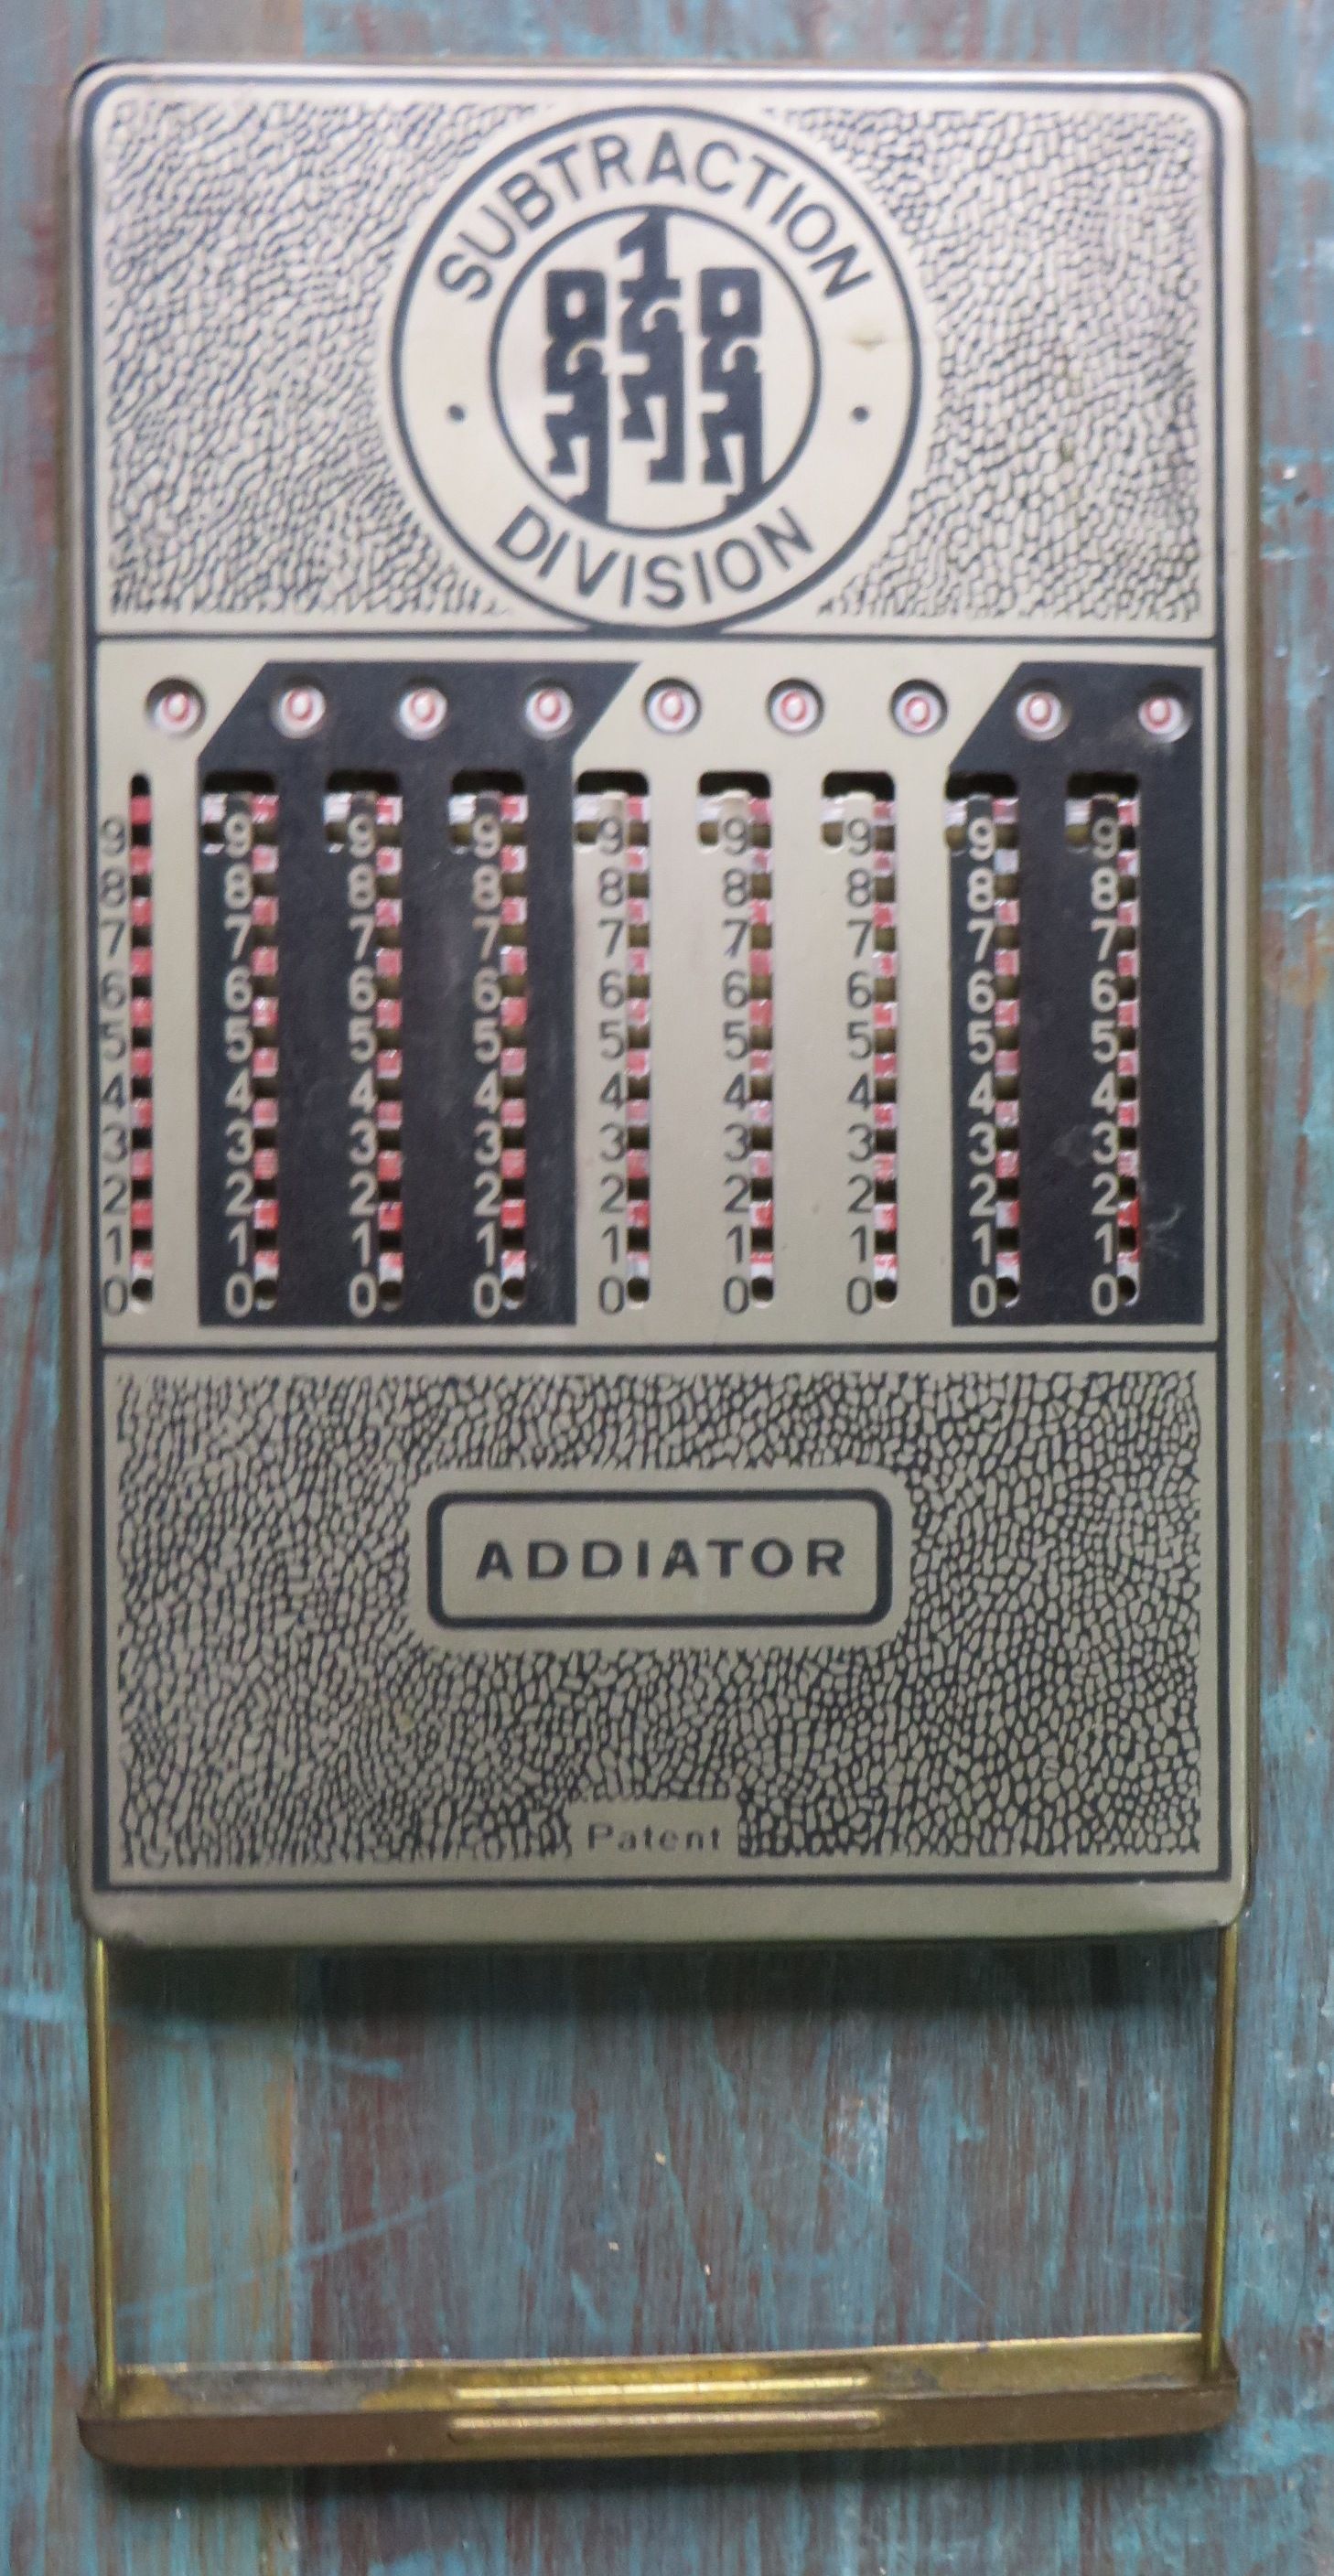 2 Vintage Manual Calculators. 1 is Chadwick Magic-brain Calculator